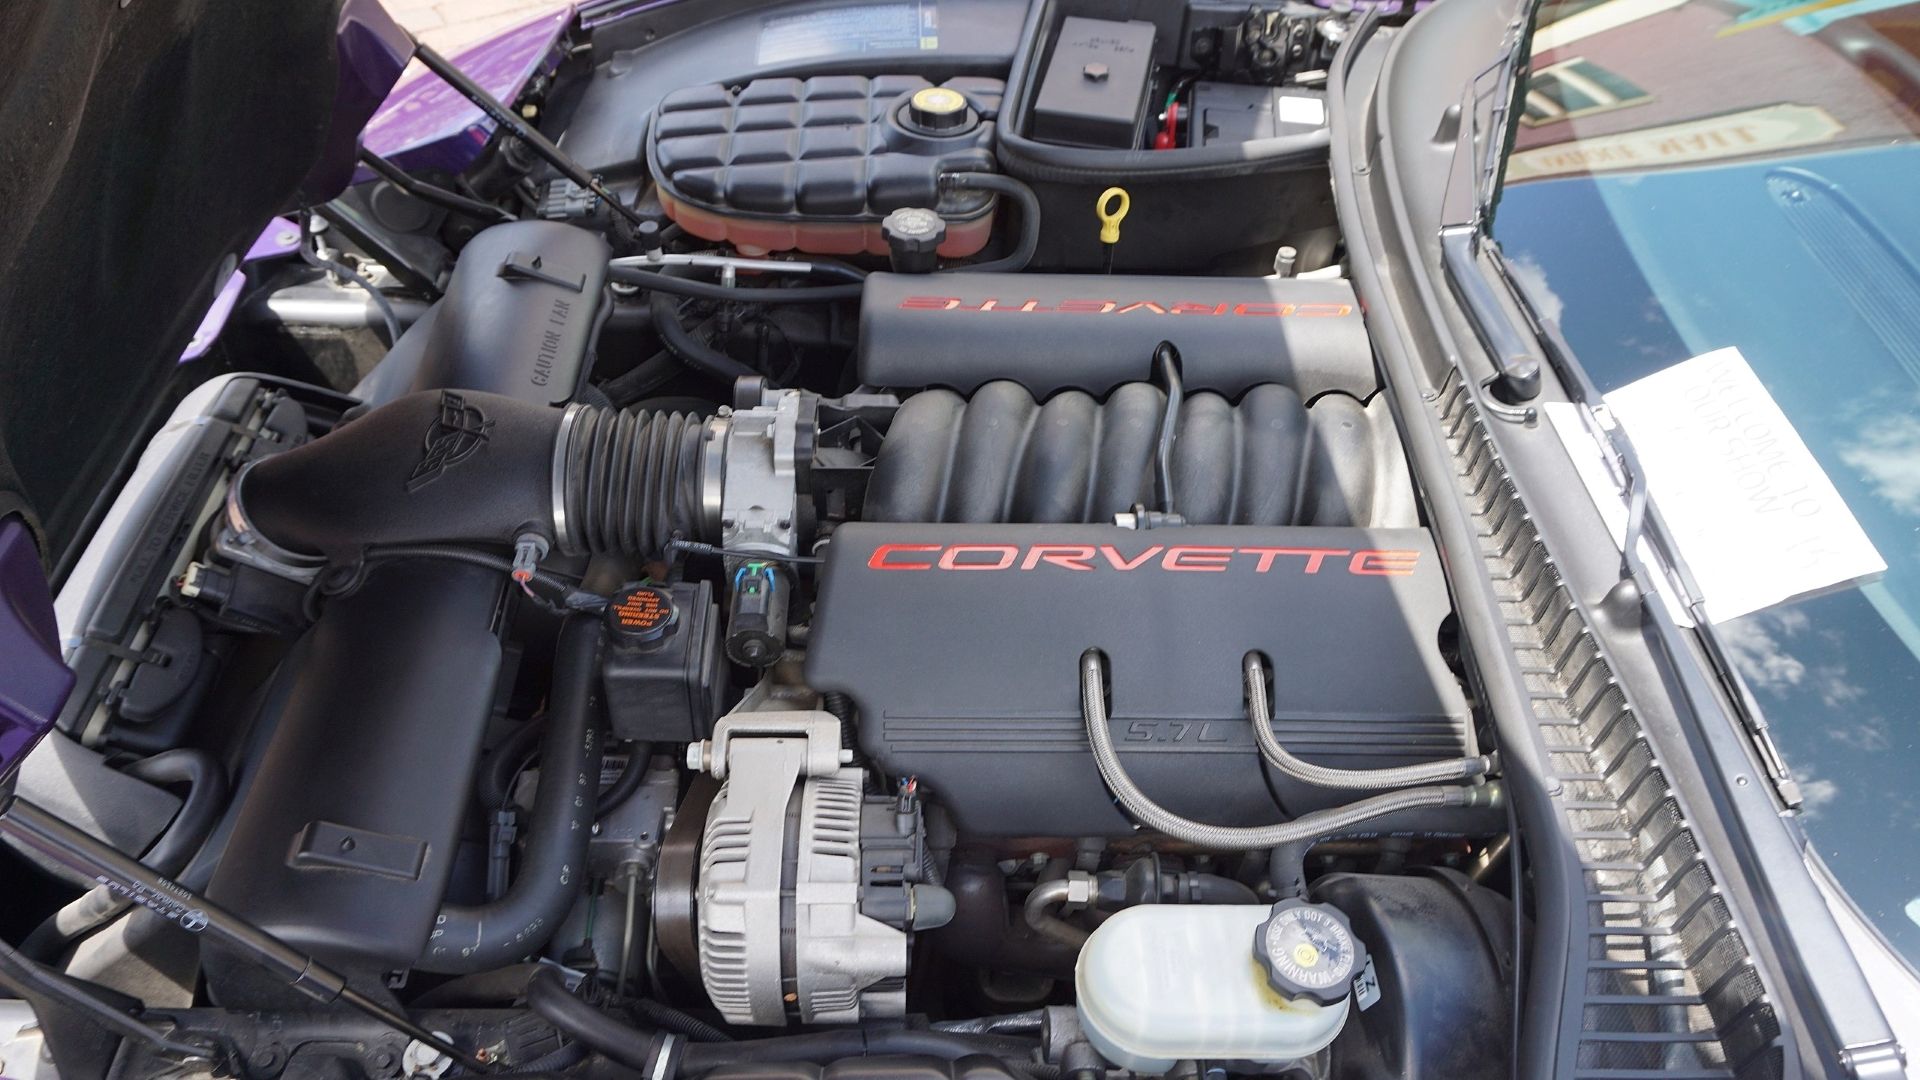 An LS1 engine in the replica of a 19998 Chevrolet Corvette Pace Car Replica 